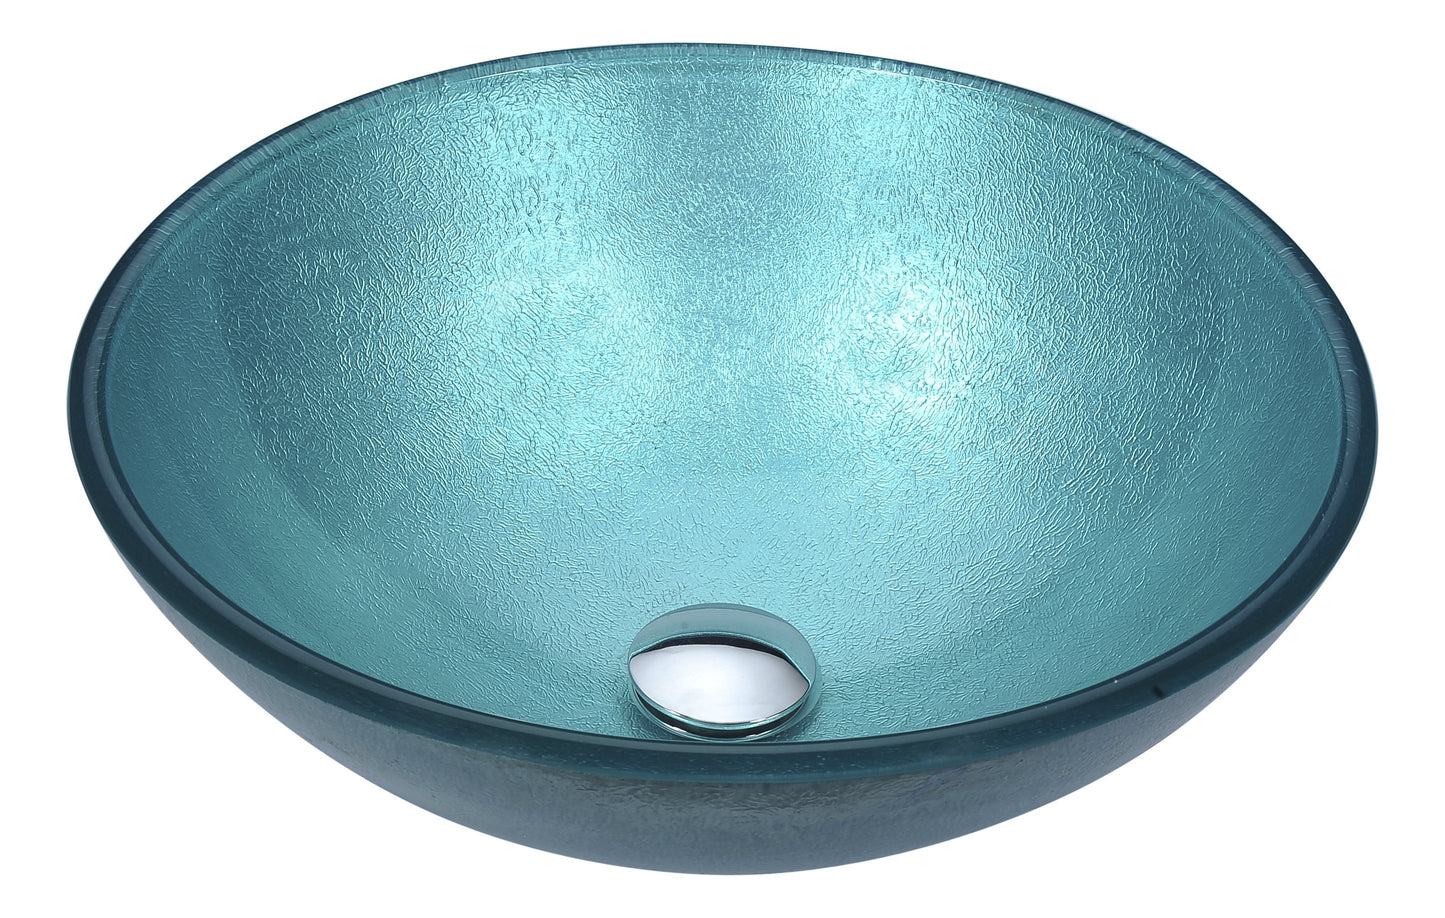 Posh Series Deco-Glass Vessel Sink in Coral Blue - Luxe Bathroom Vanities